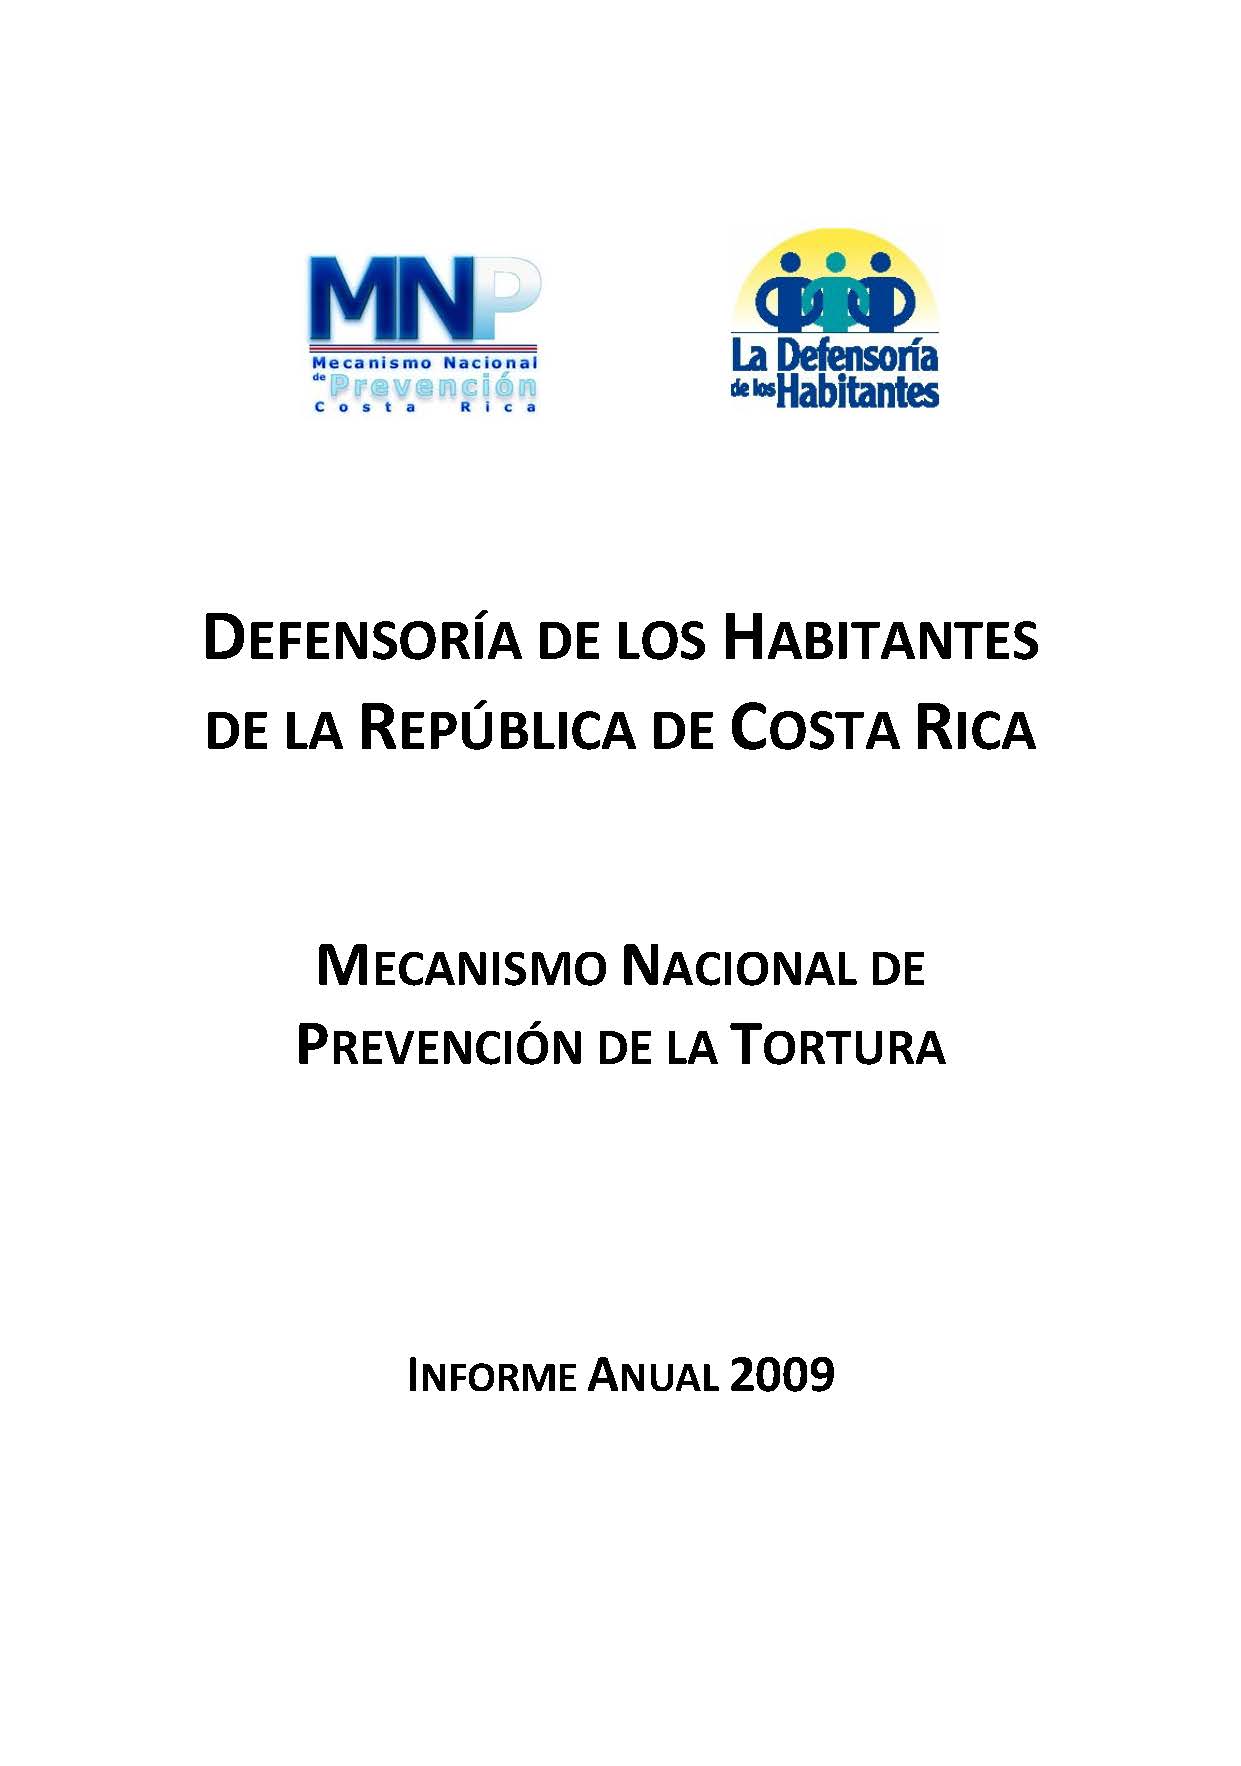 informe anual de albores 2009